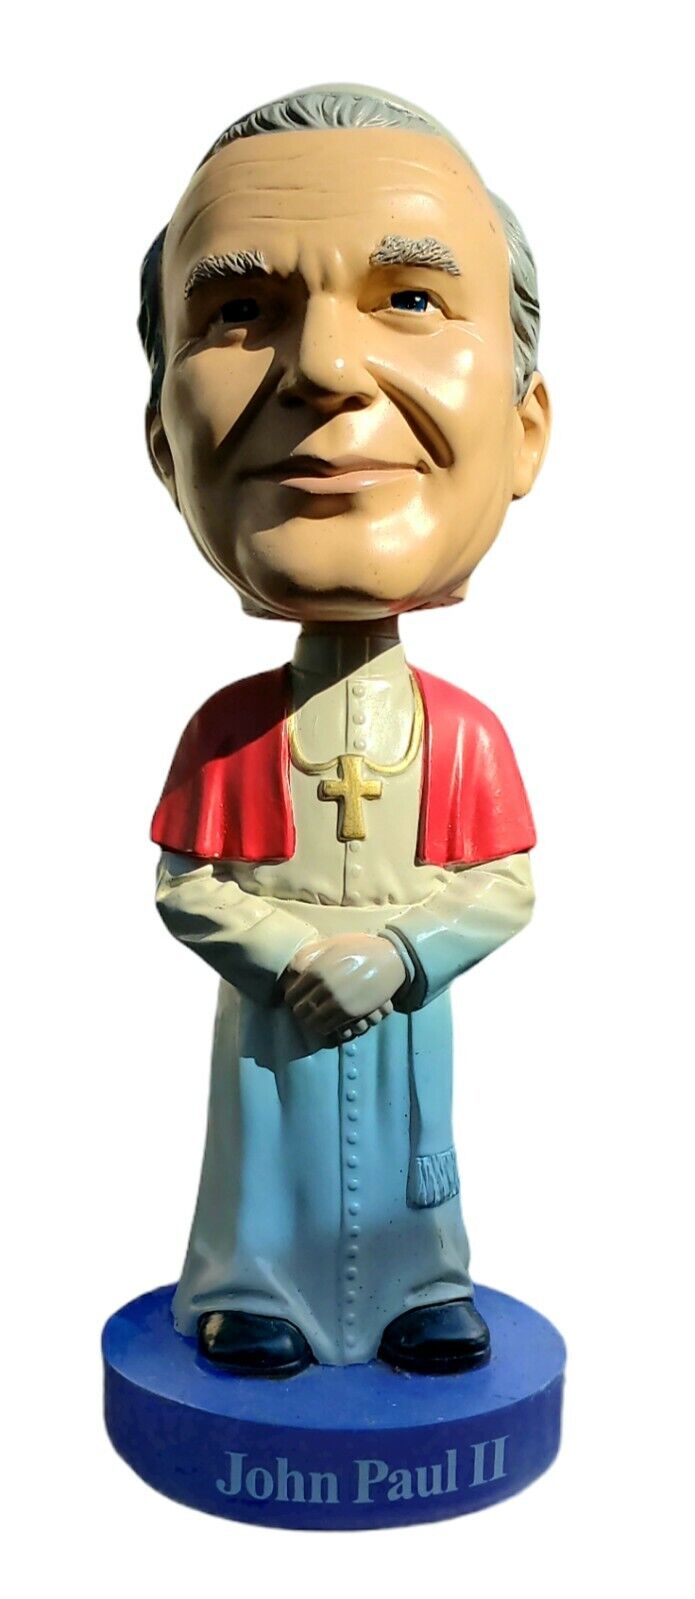 Pope John Paul II Bobblehead from Bosley Bobbers